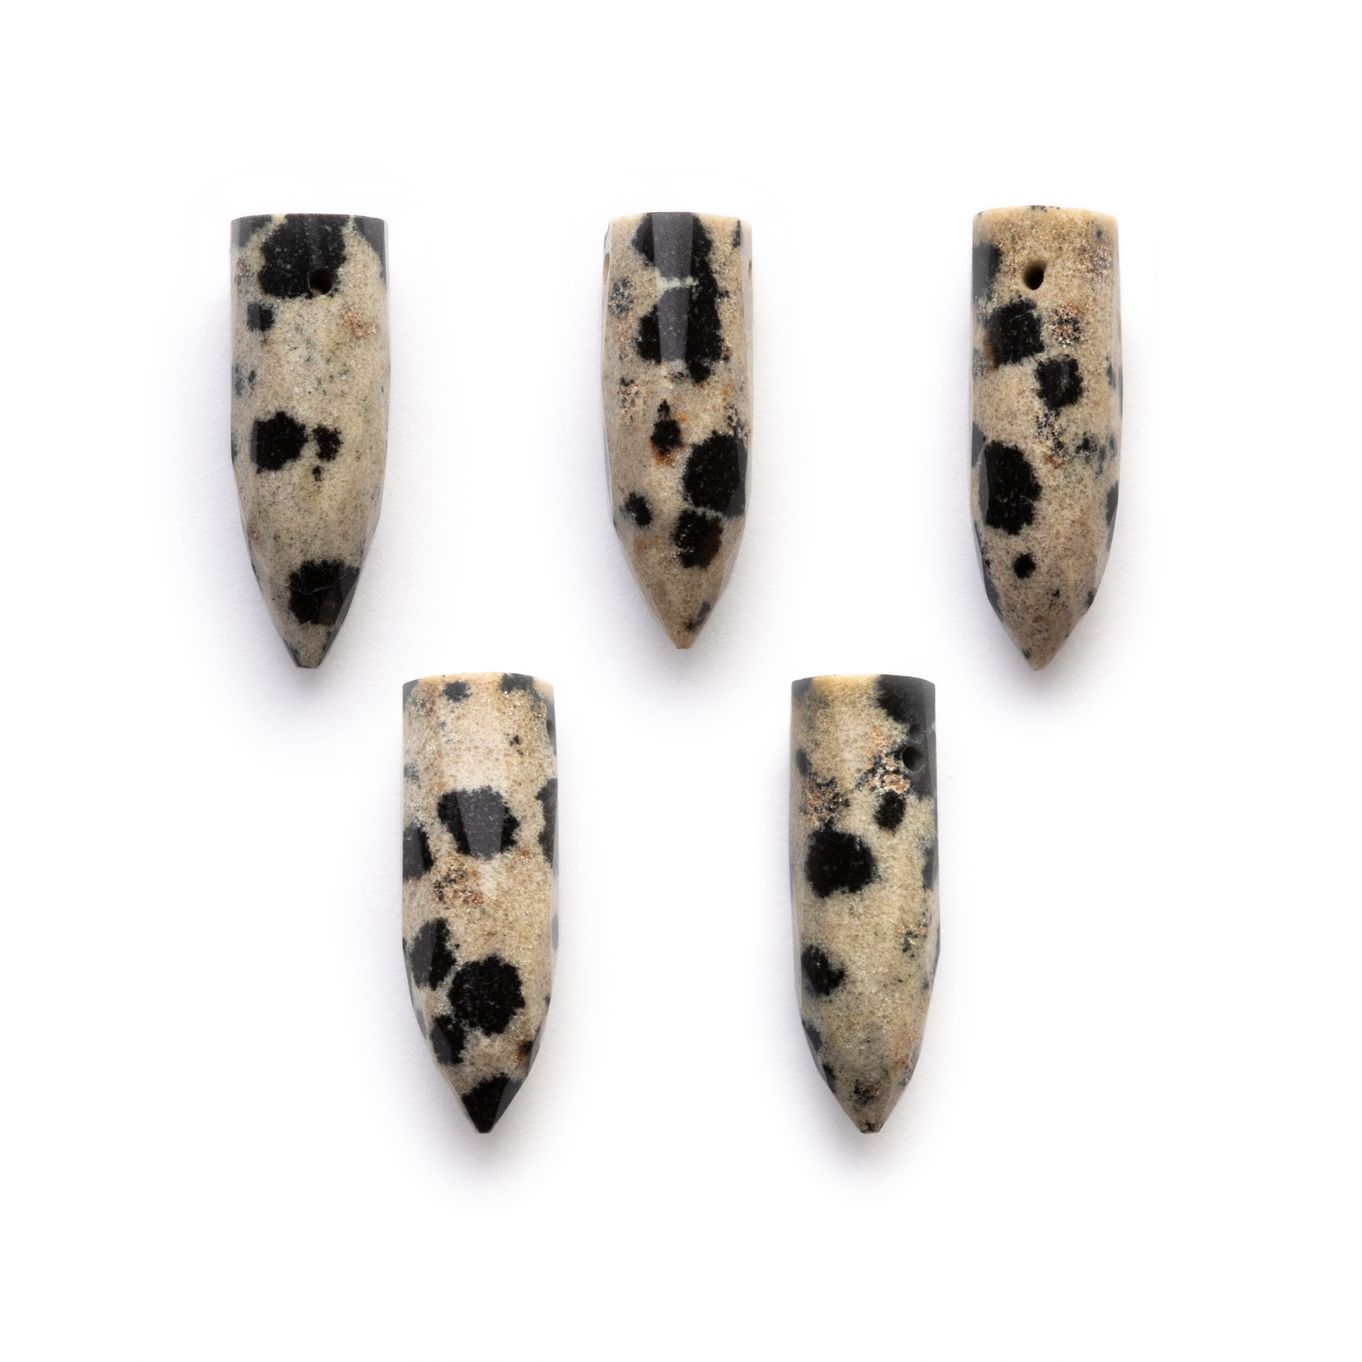 Dalmatian Jasper Faceted Bullet Shaped Beads - Approx 15x4.5mm